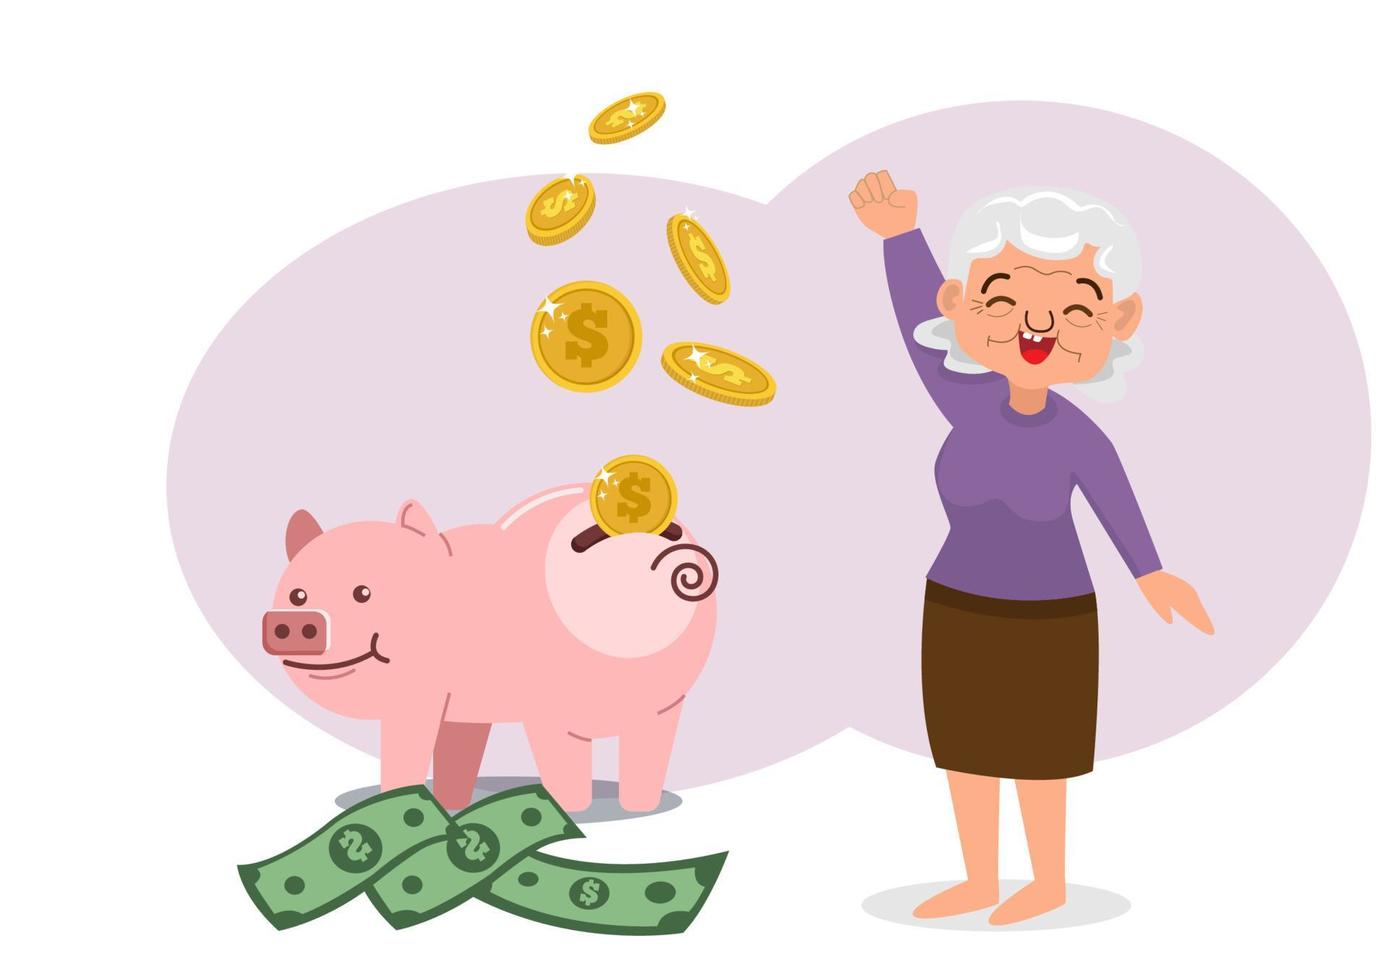 Retirement Savings Ideas old woman character saving money put in a pink piggy bank flat style cartoon illustration vector